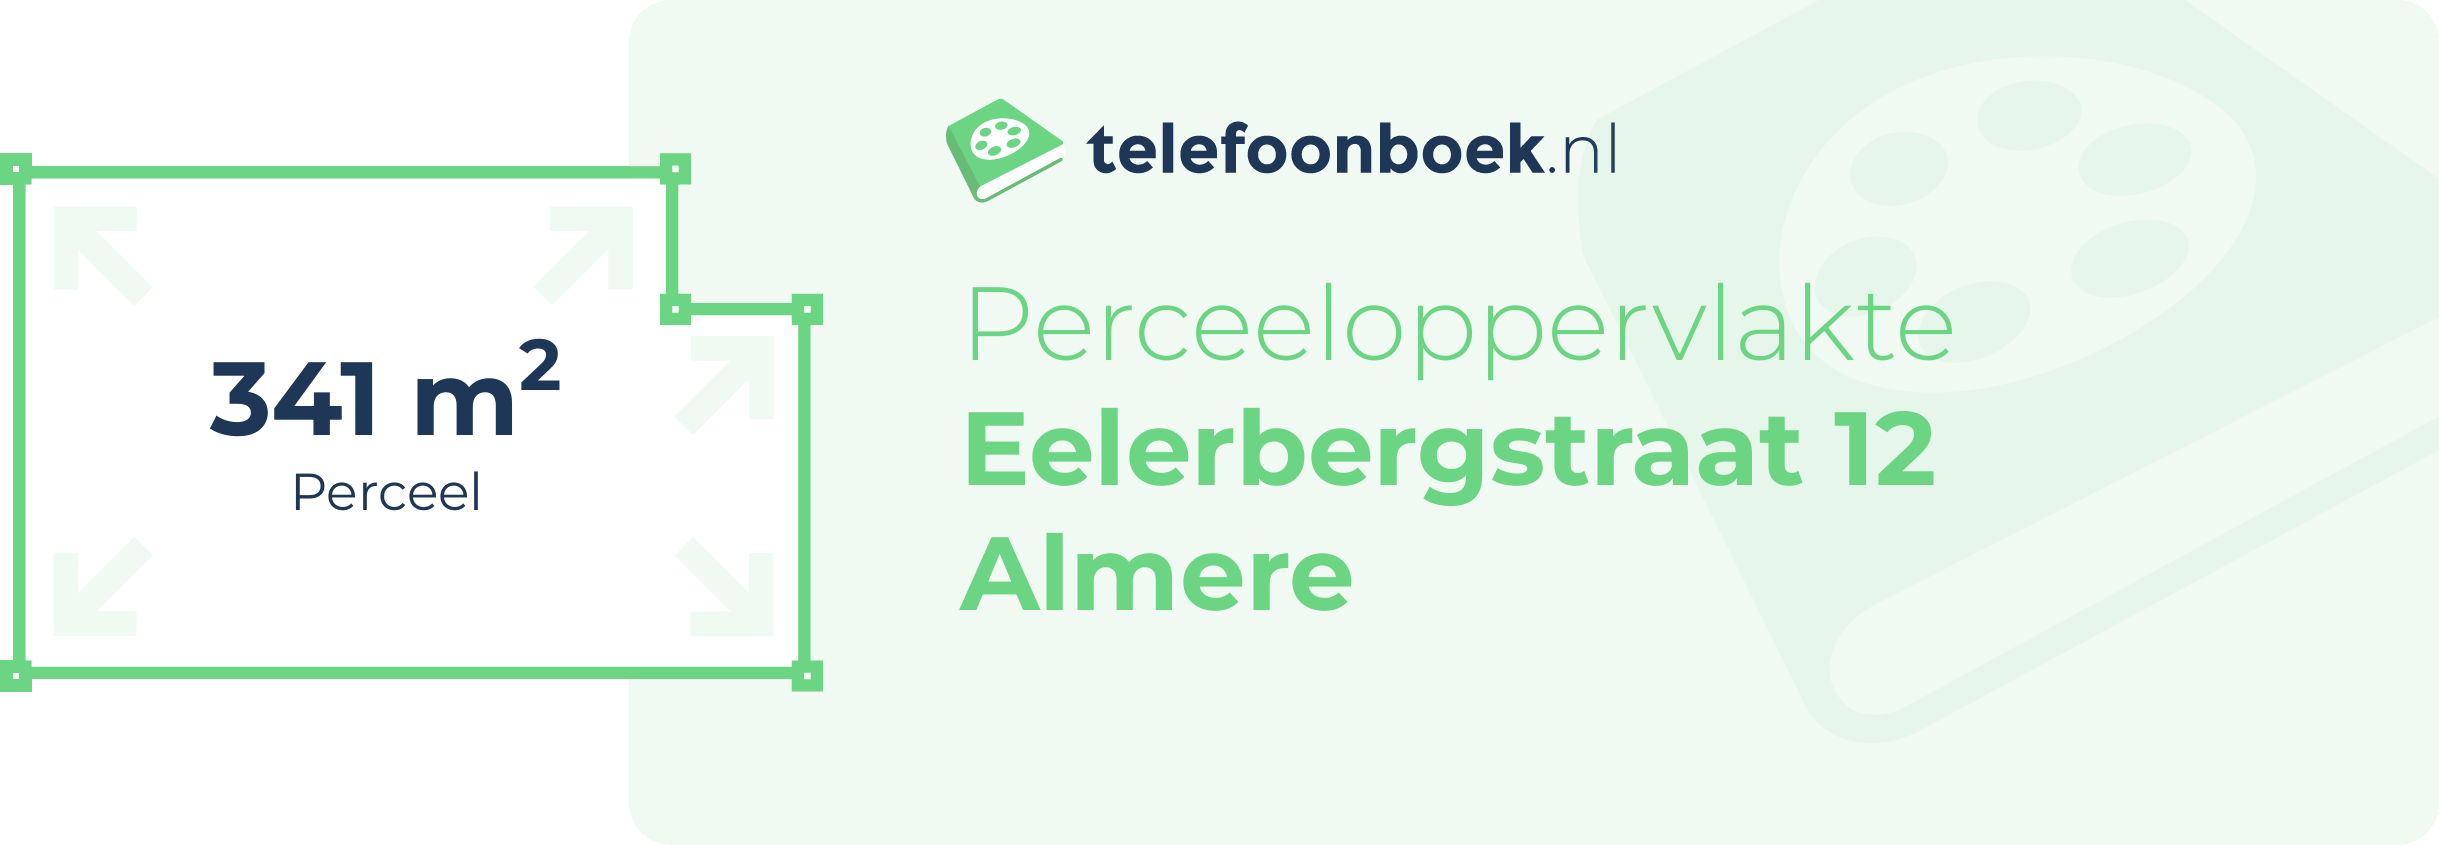 Perceeloppervlakte Eelerbergstraat 12 Almere